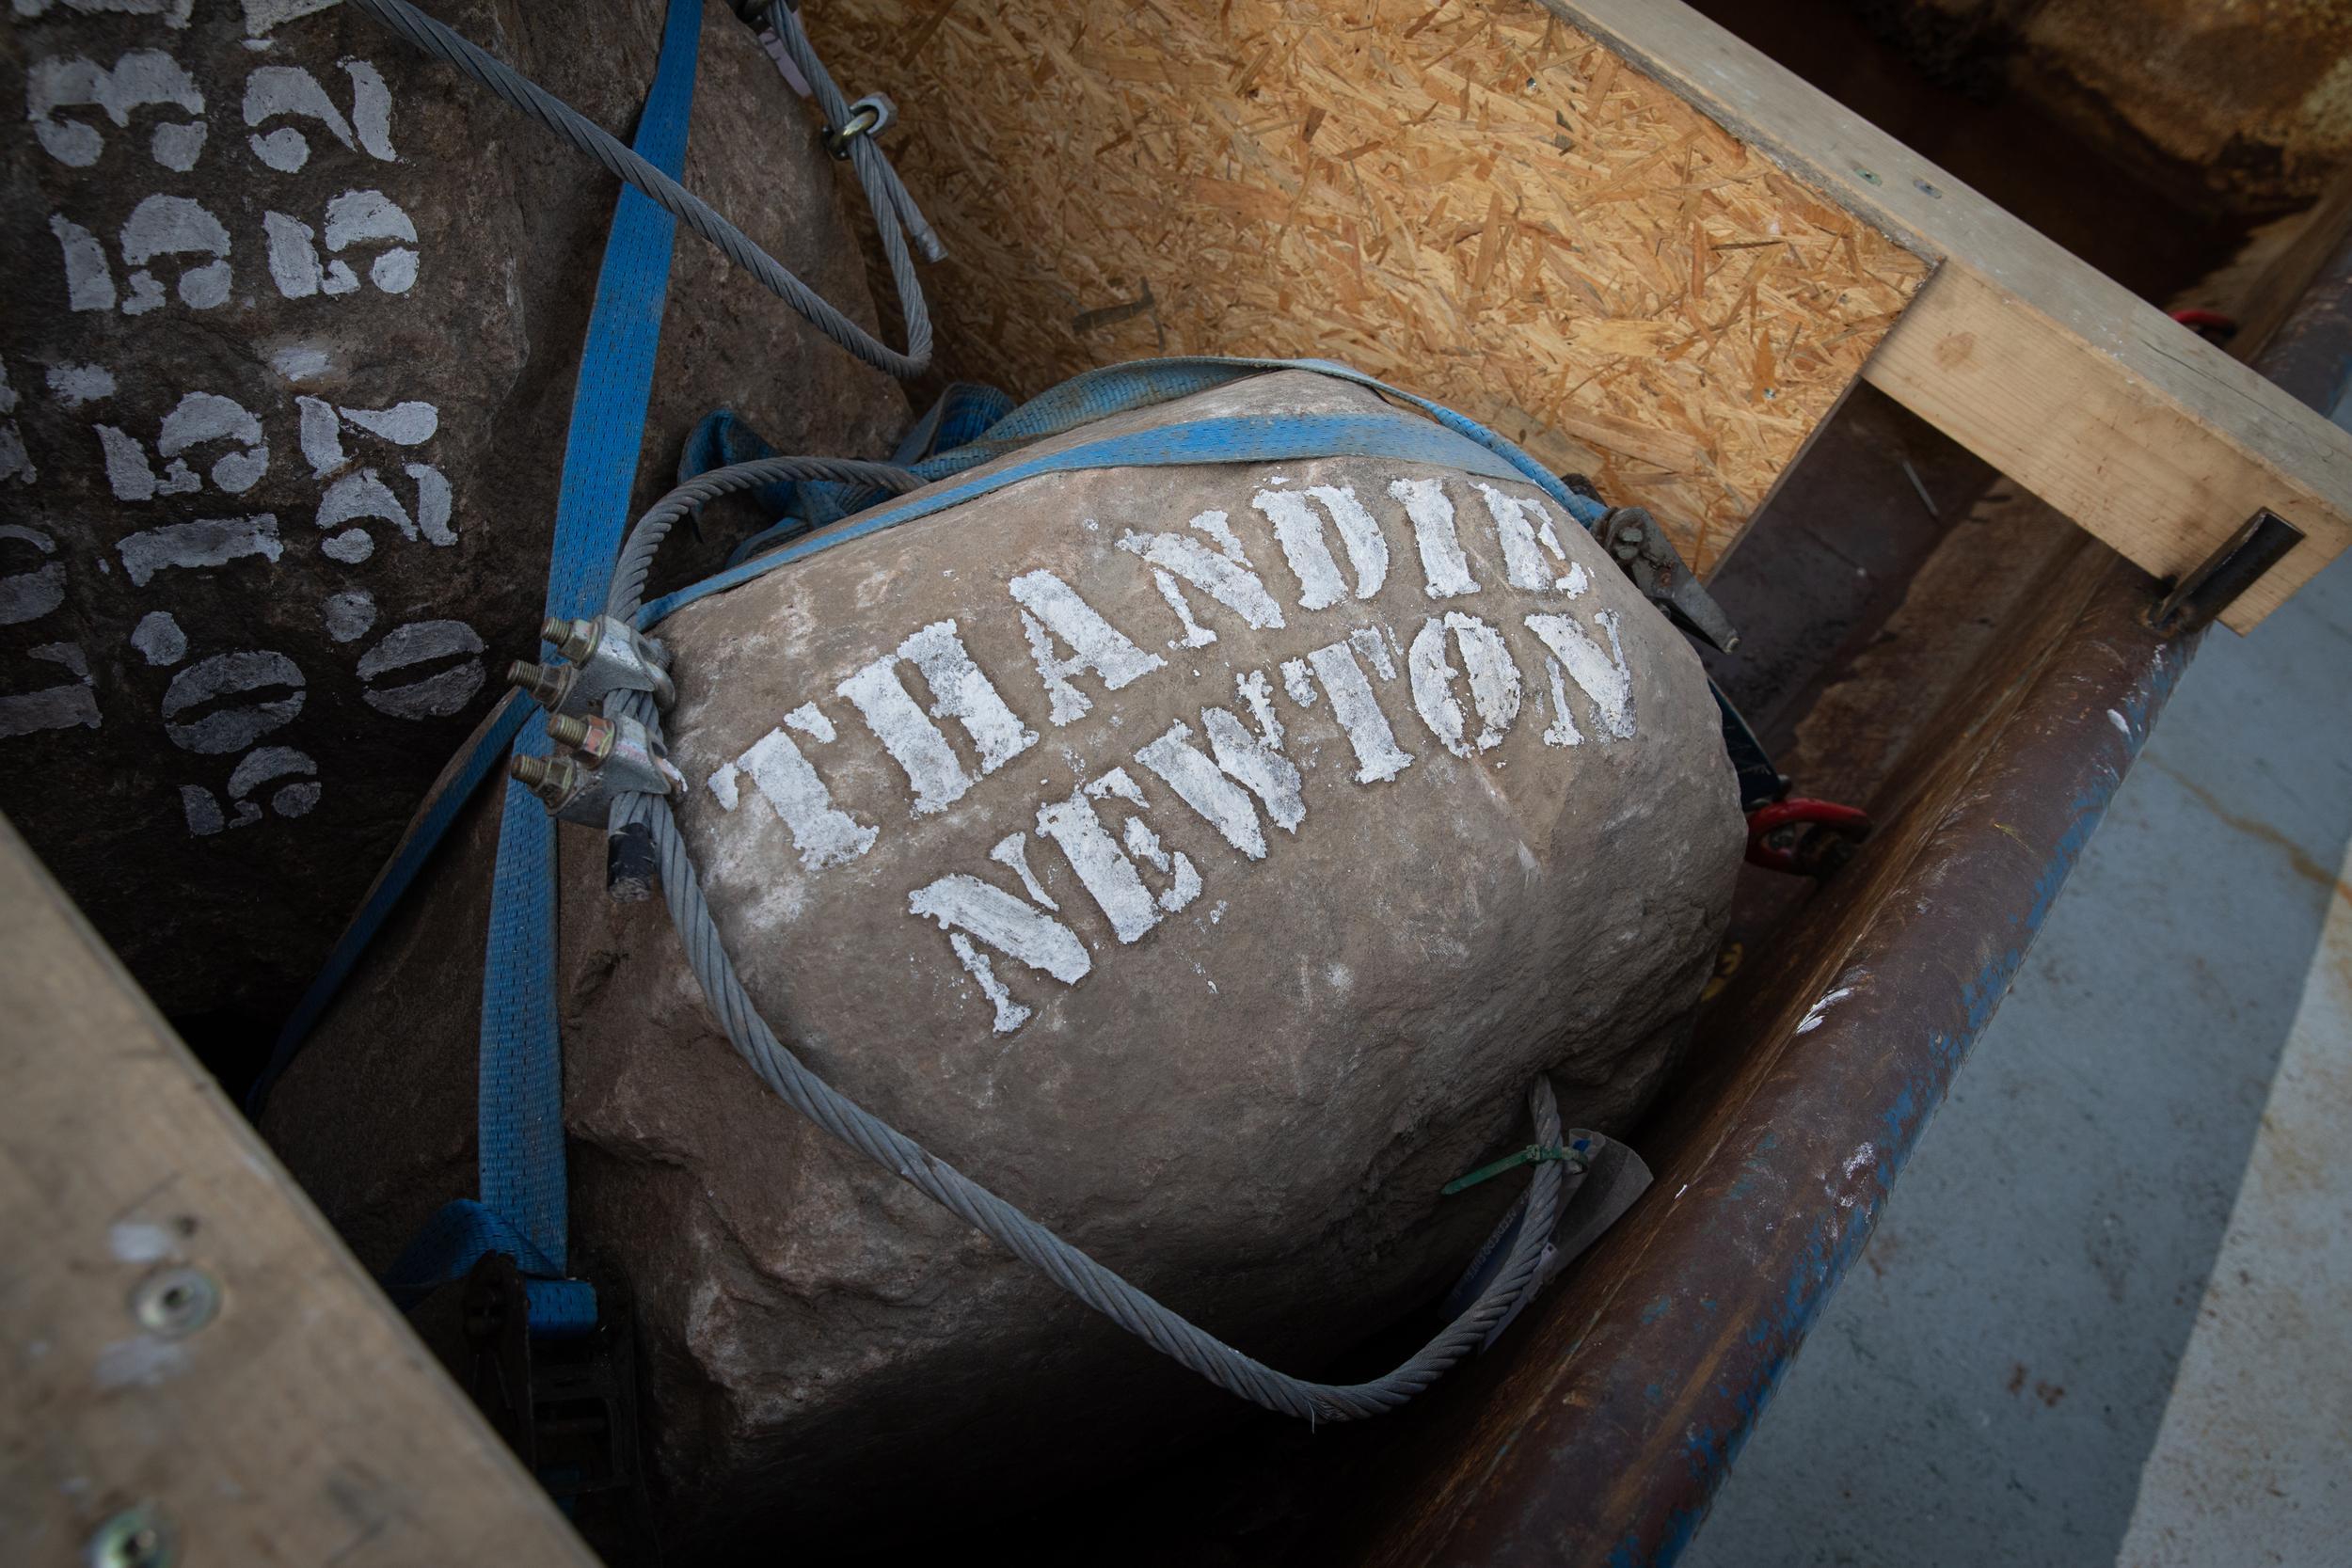 A boulder with Thandie Newton written on it